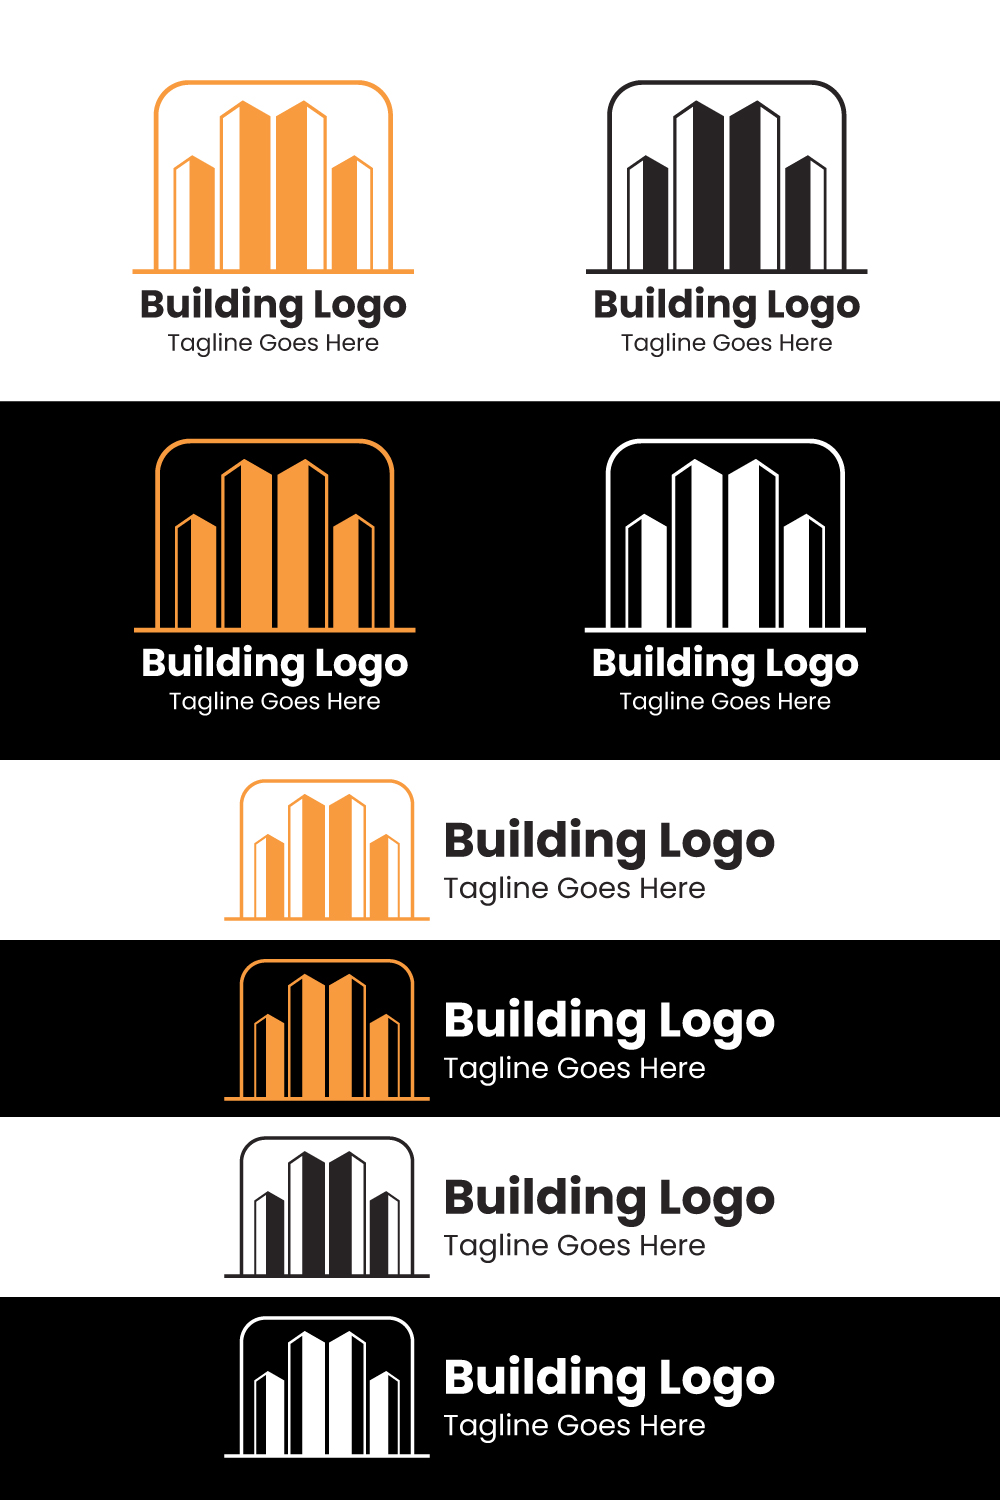 Building logo pinterest preview image.